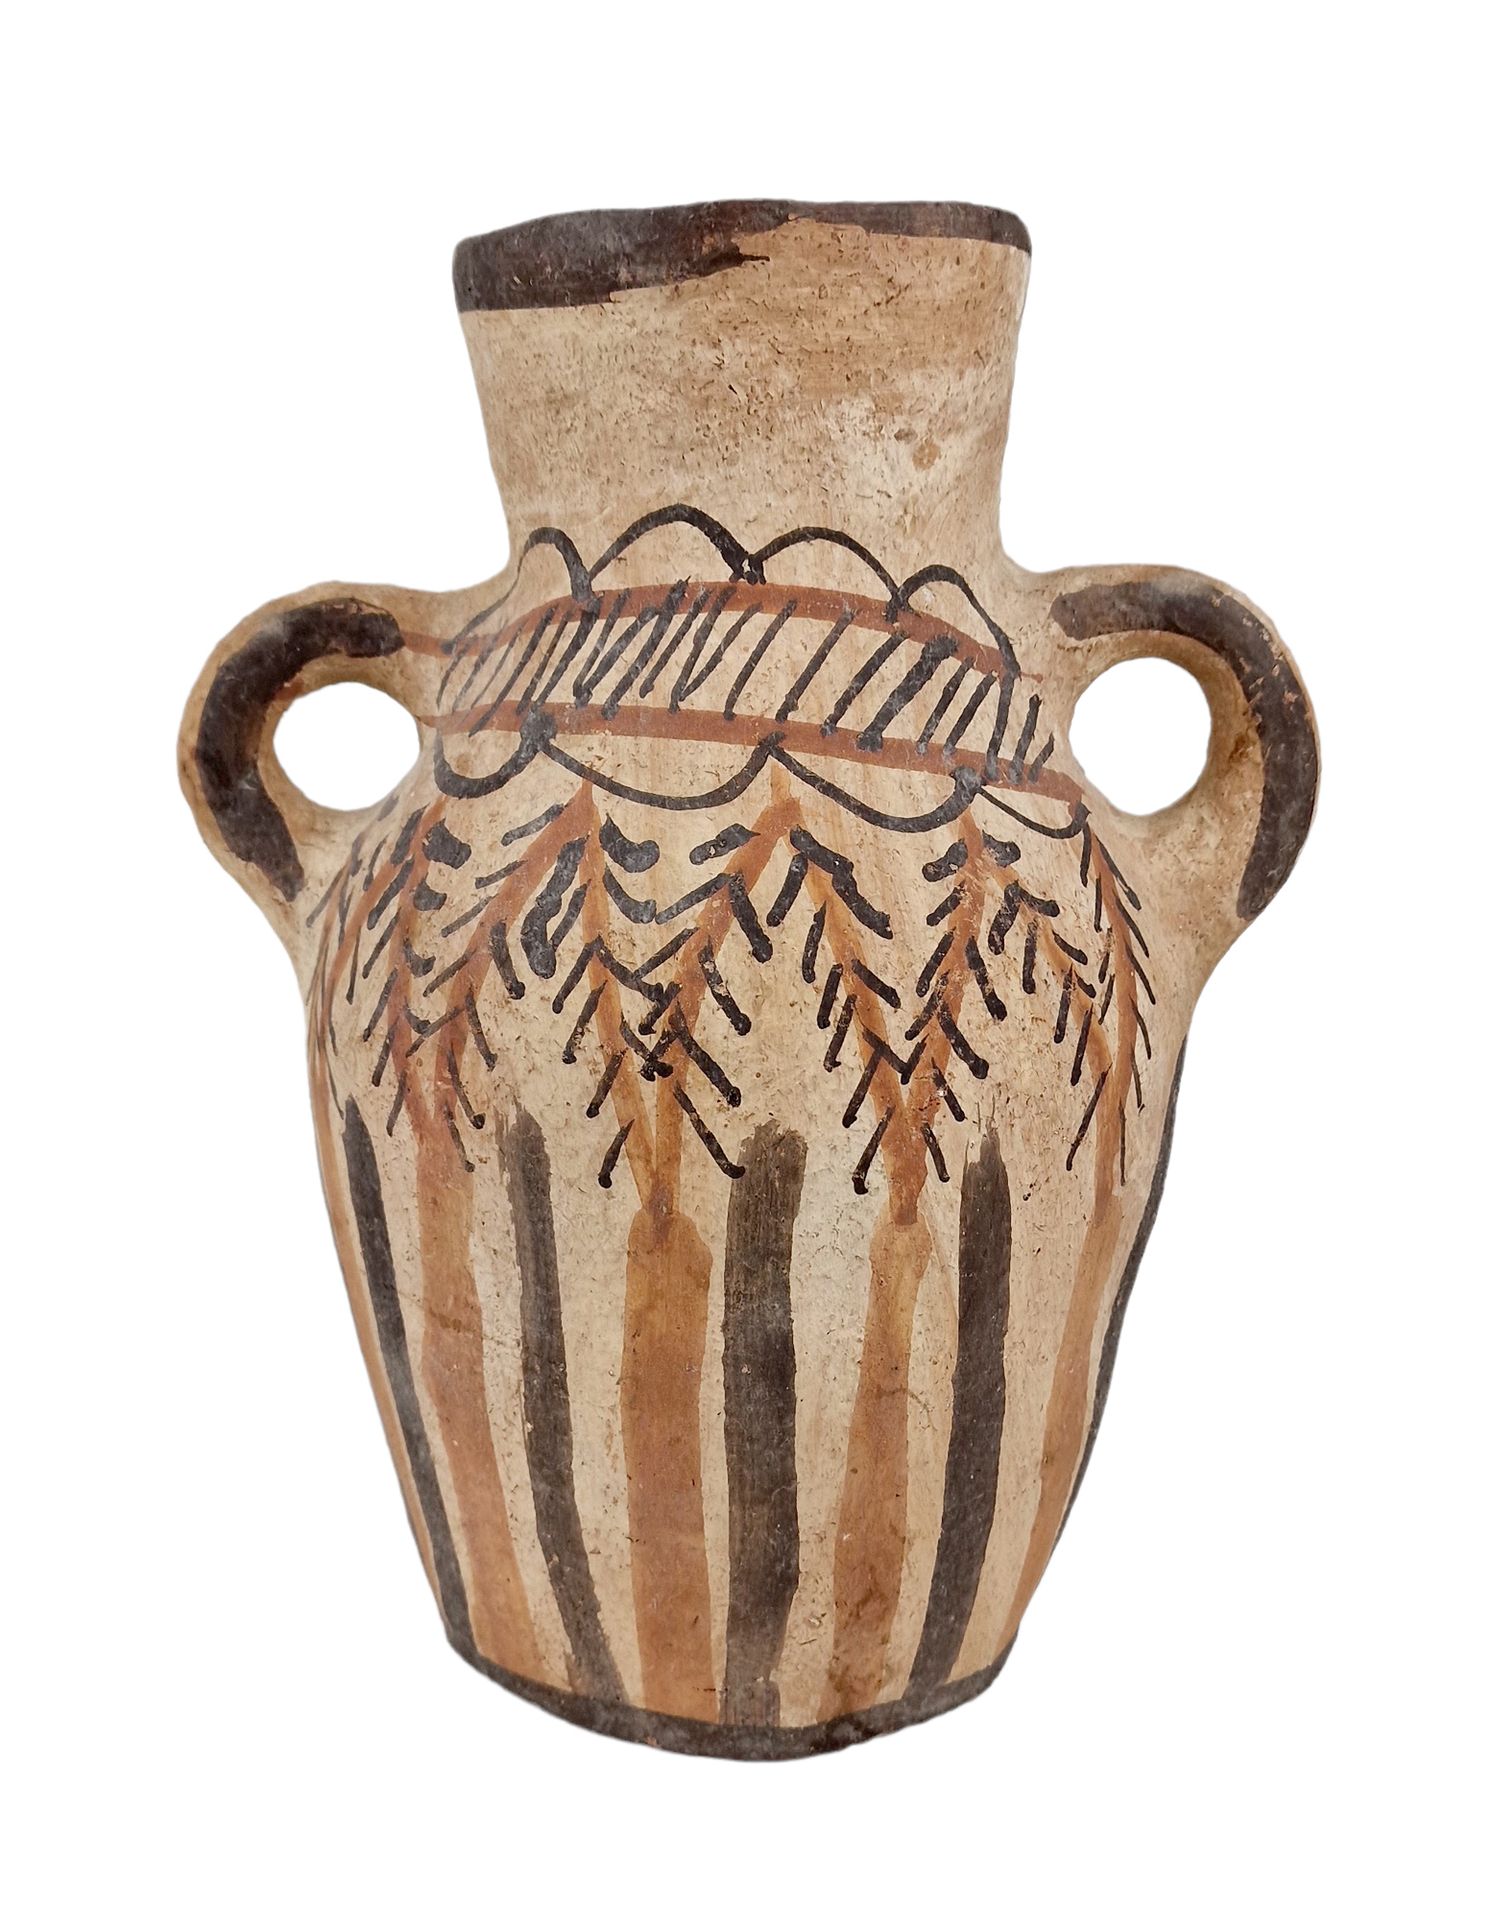 CERAMIQUE FRANCAISE VERS 1950-60 美丽的双耳瓶



有两个把手，陶土质地，有仿古彩绘装饰。

尺寸：H。30厘米左右。